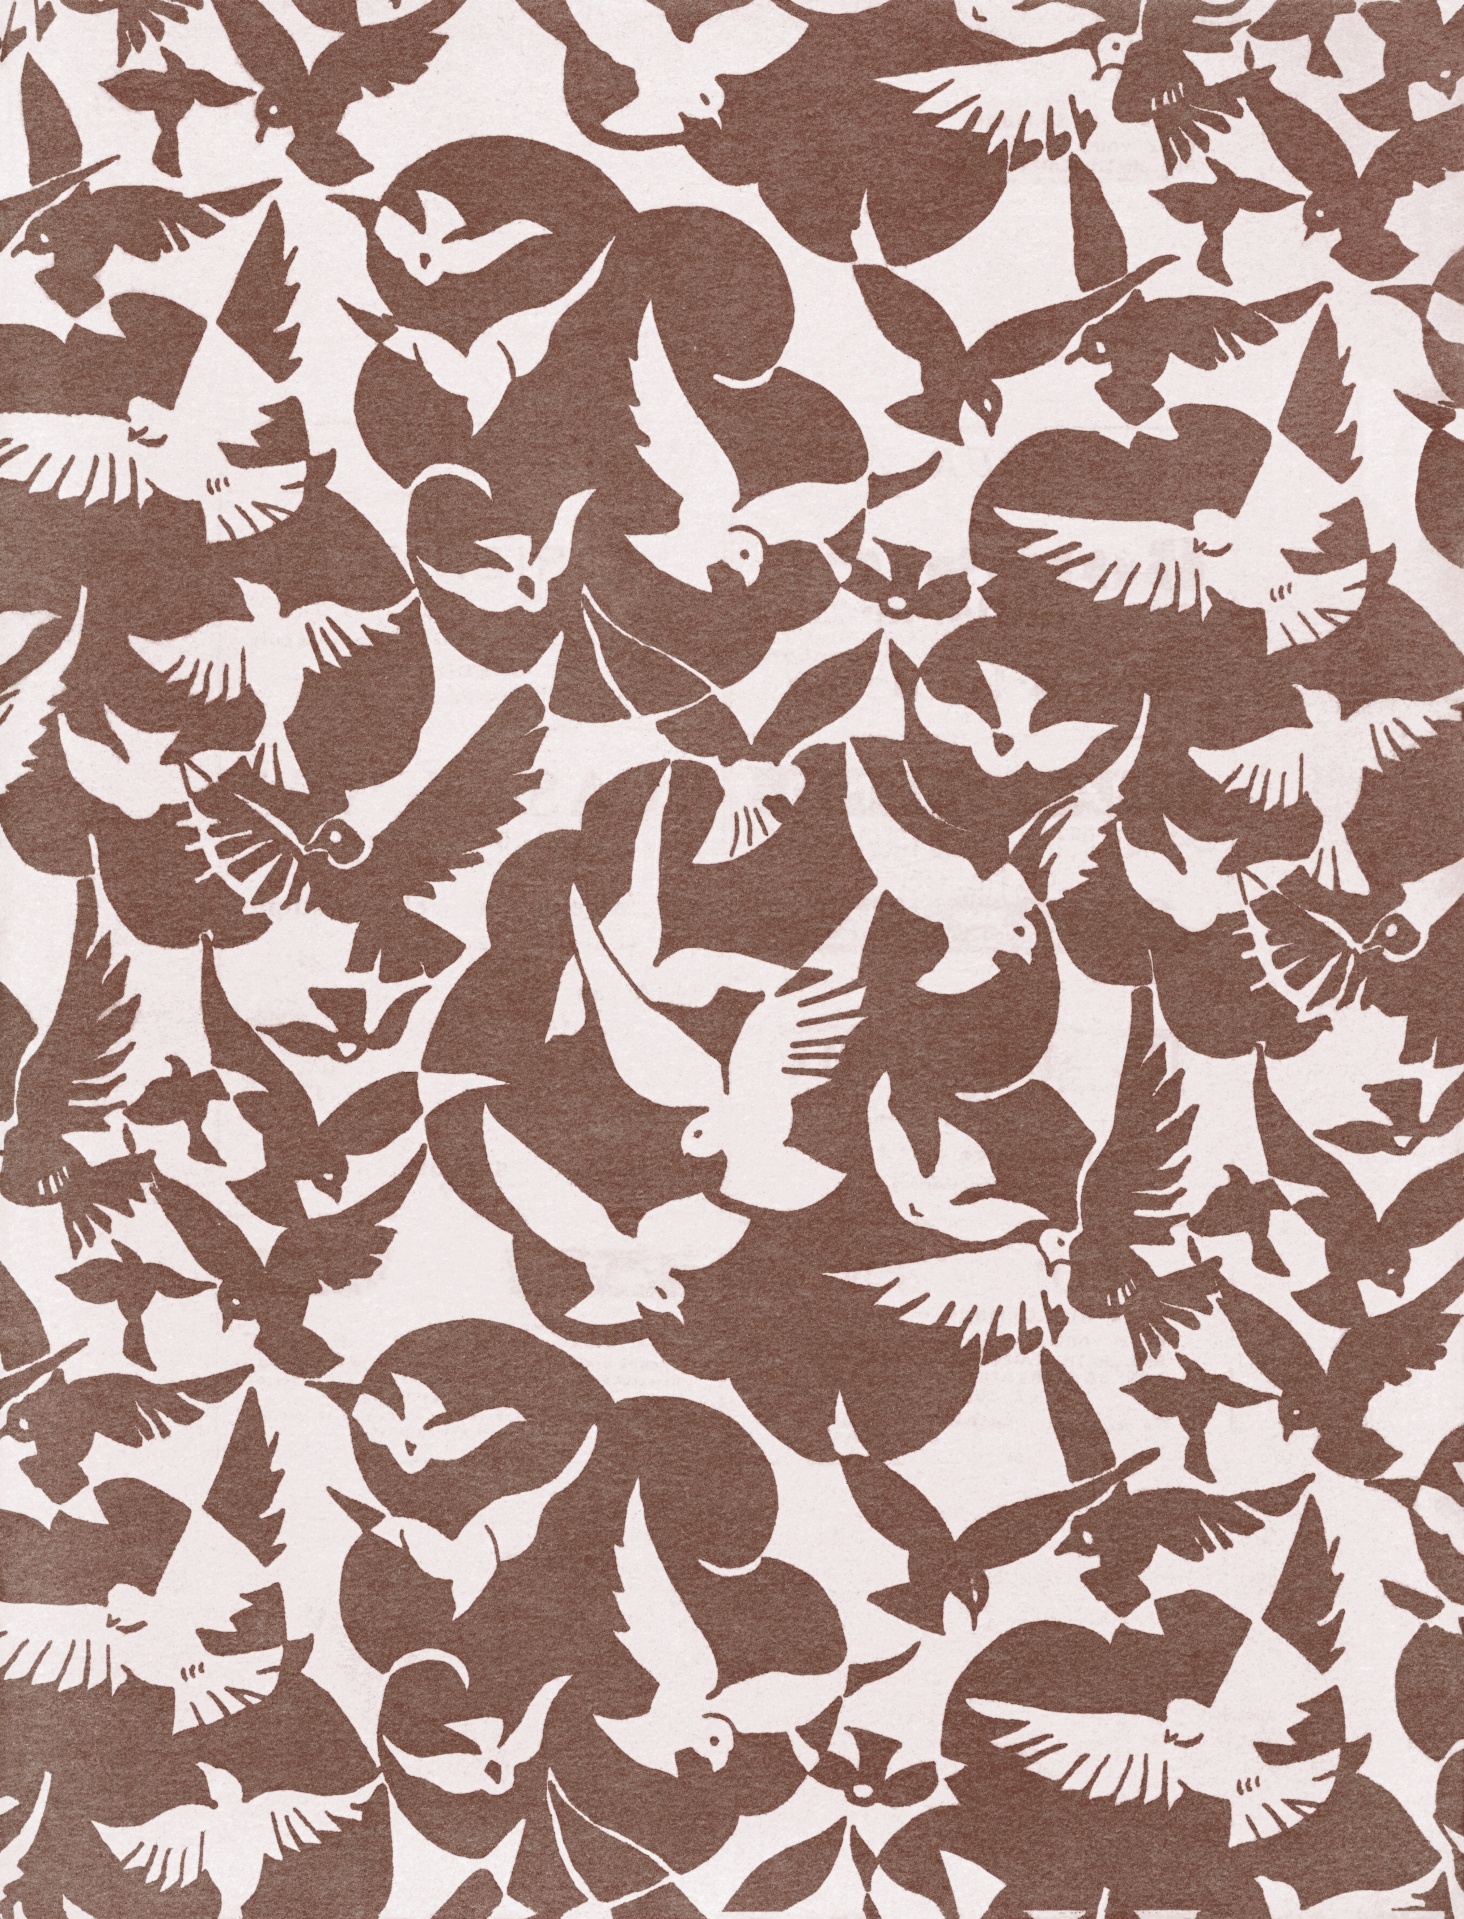 Birds white doves retro pattern vintage style pastel color paper background